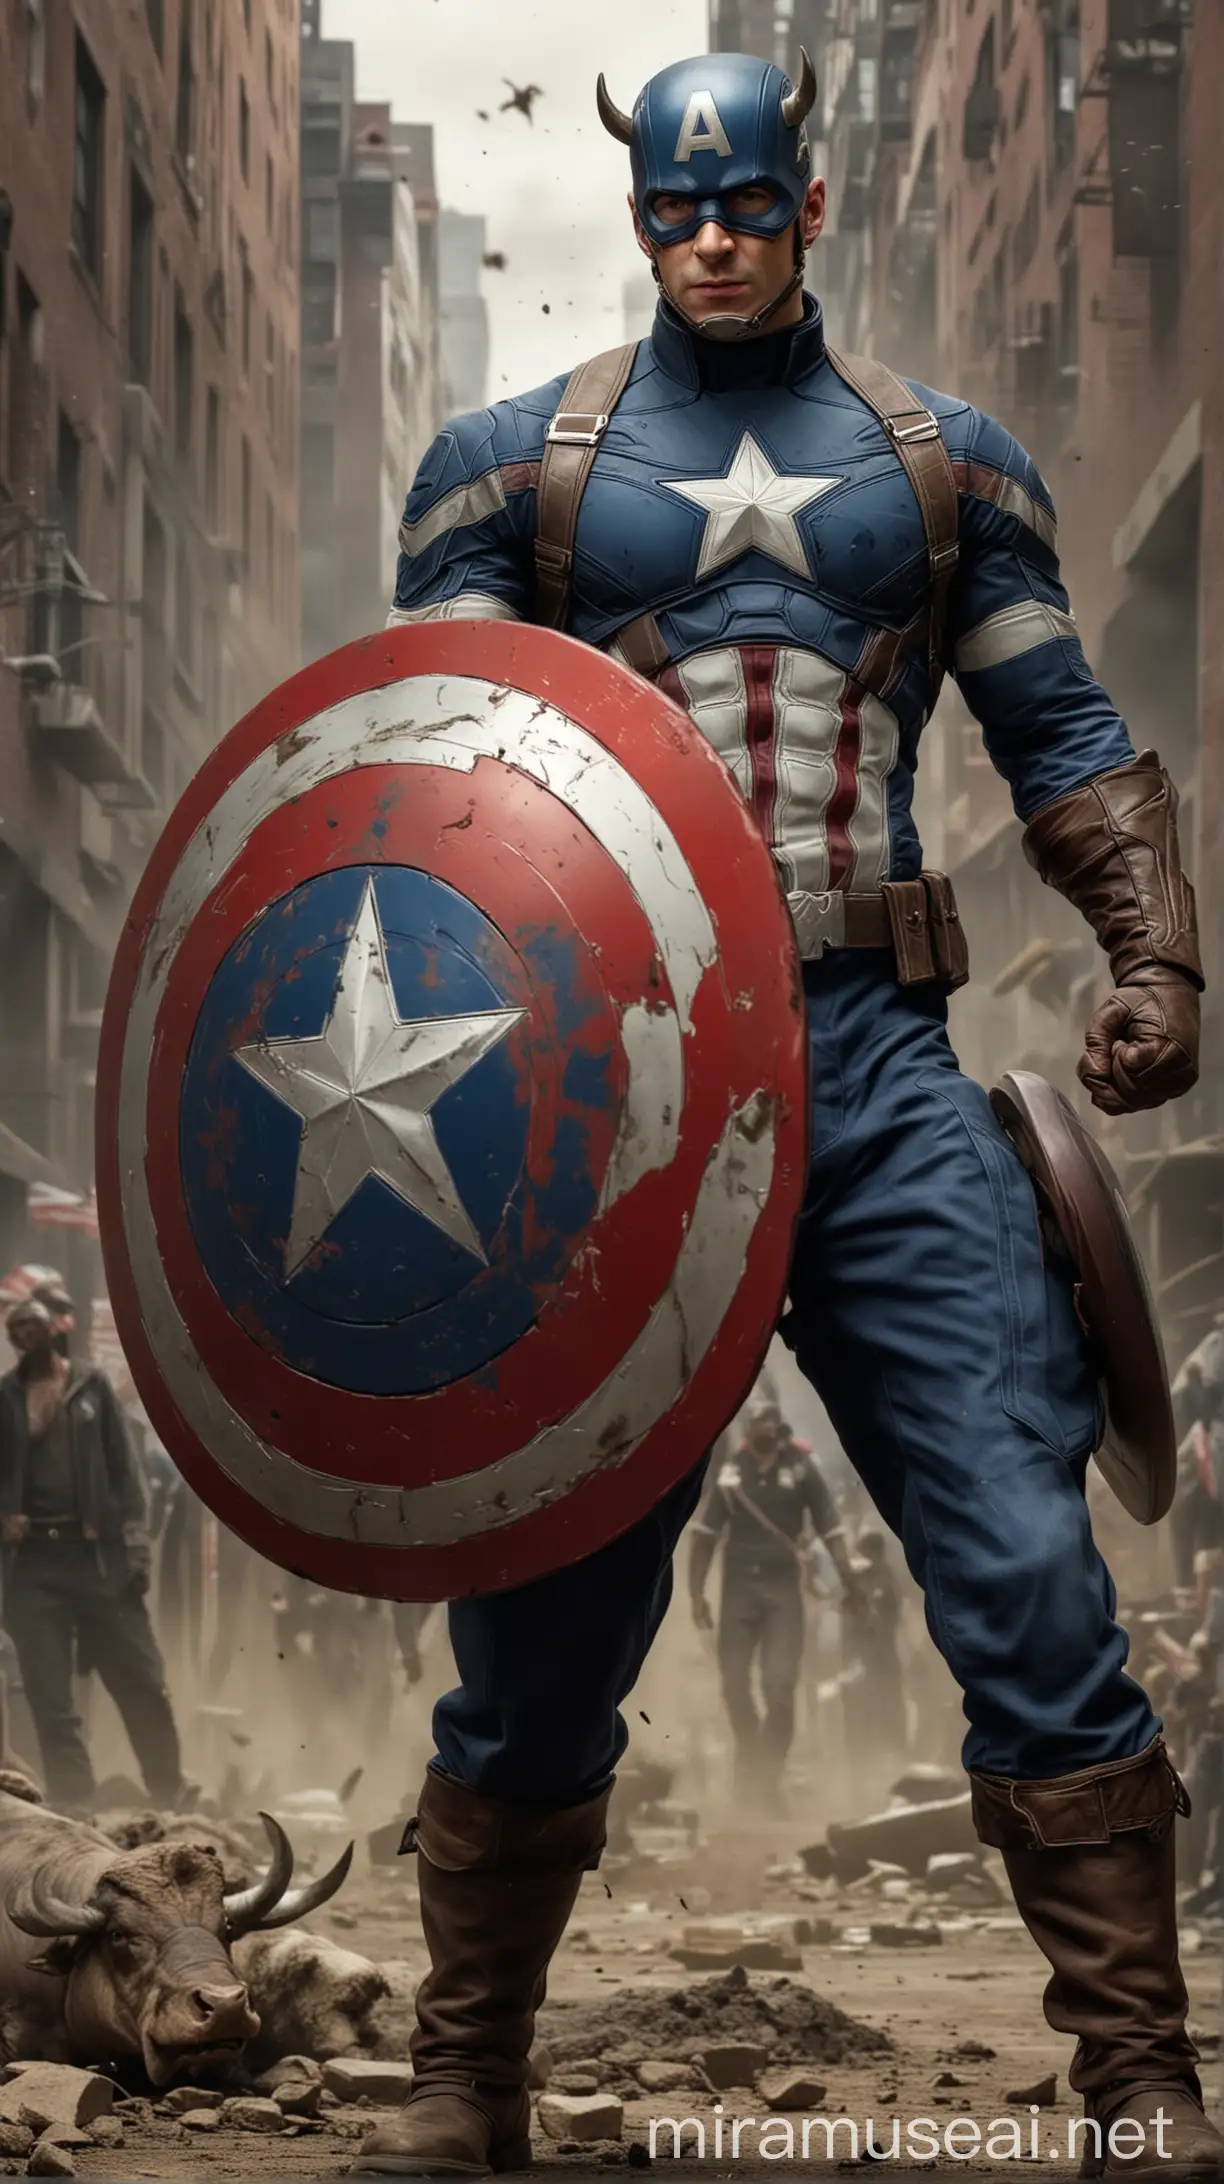 Captain America Charging Like a Bull